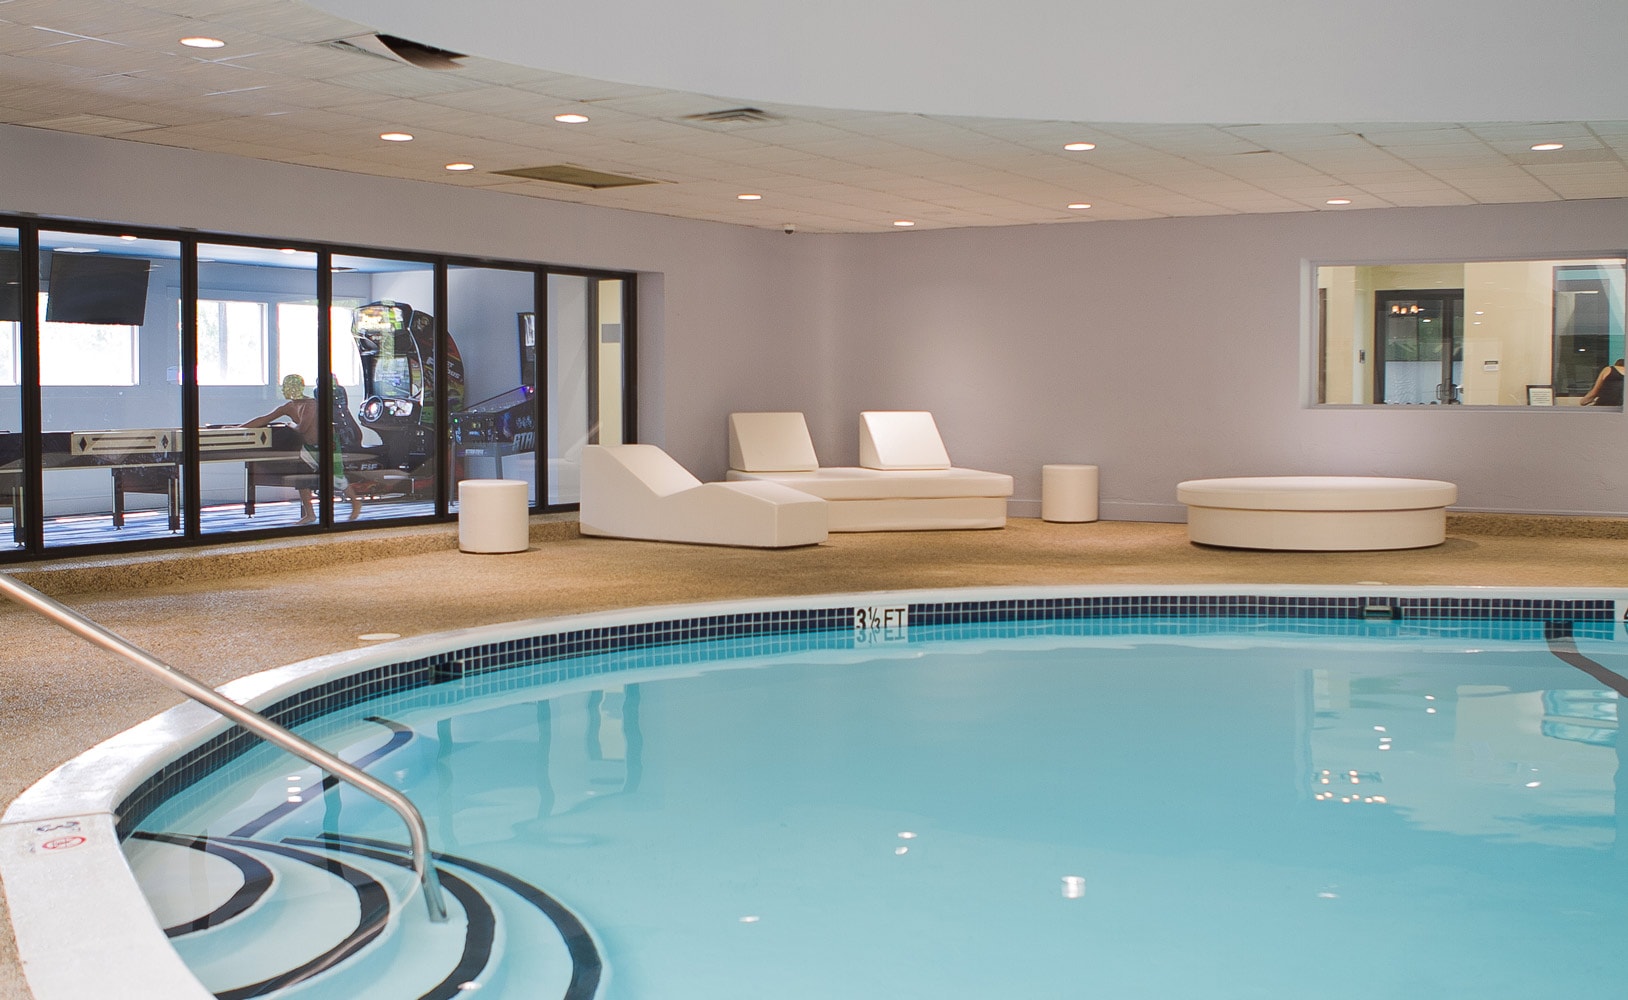 Century Hills apartment indoor swimming pool design by Annette Jaffe Interiors